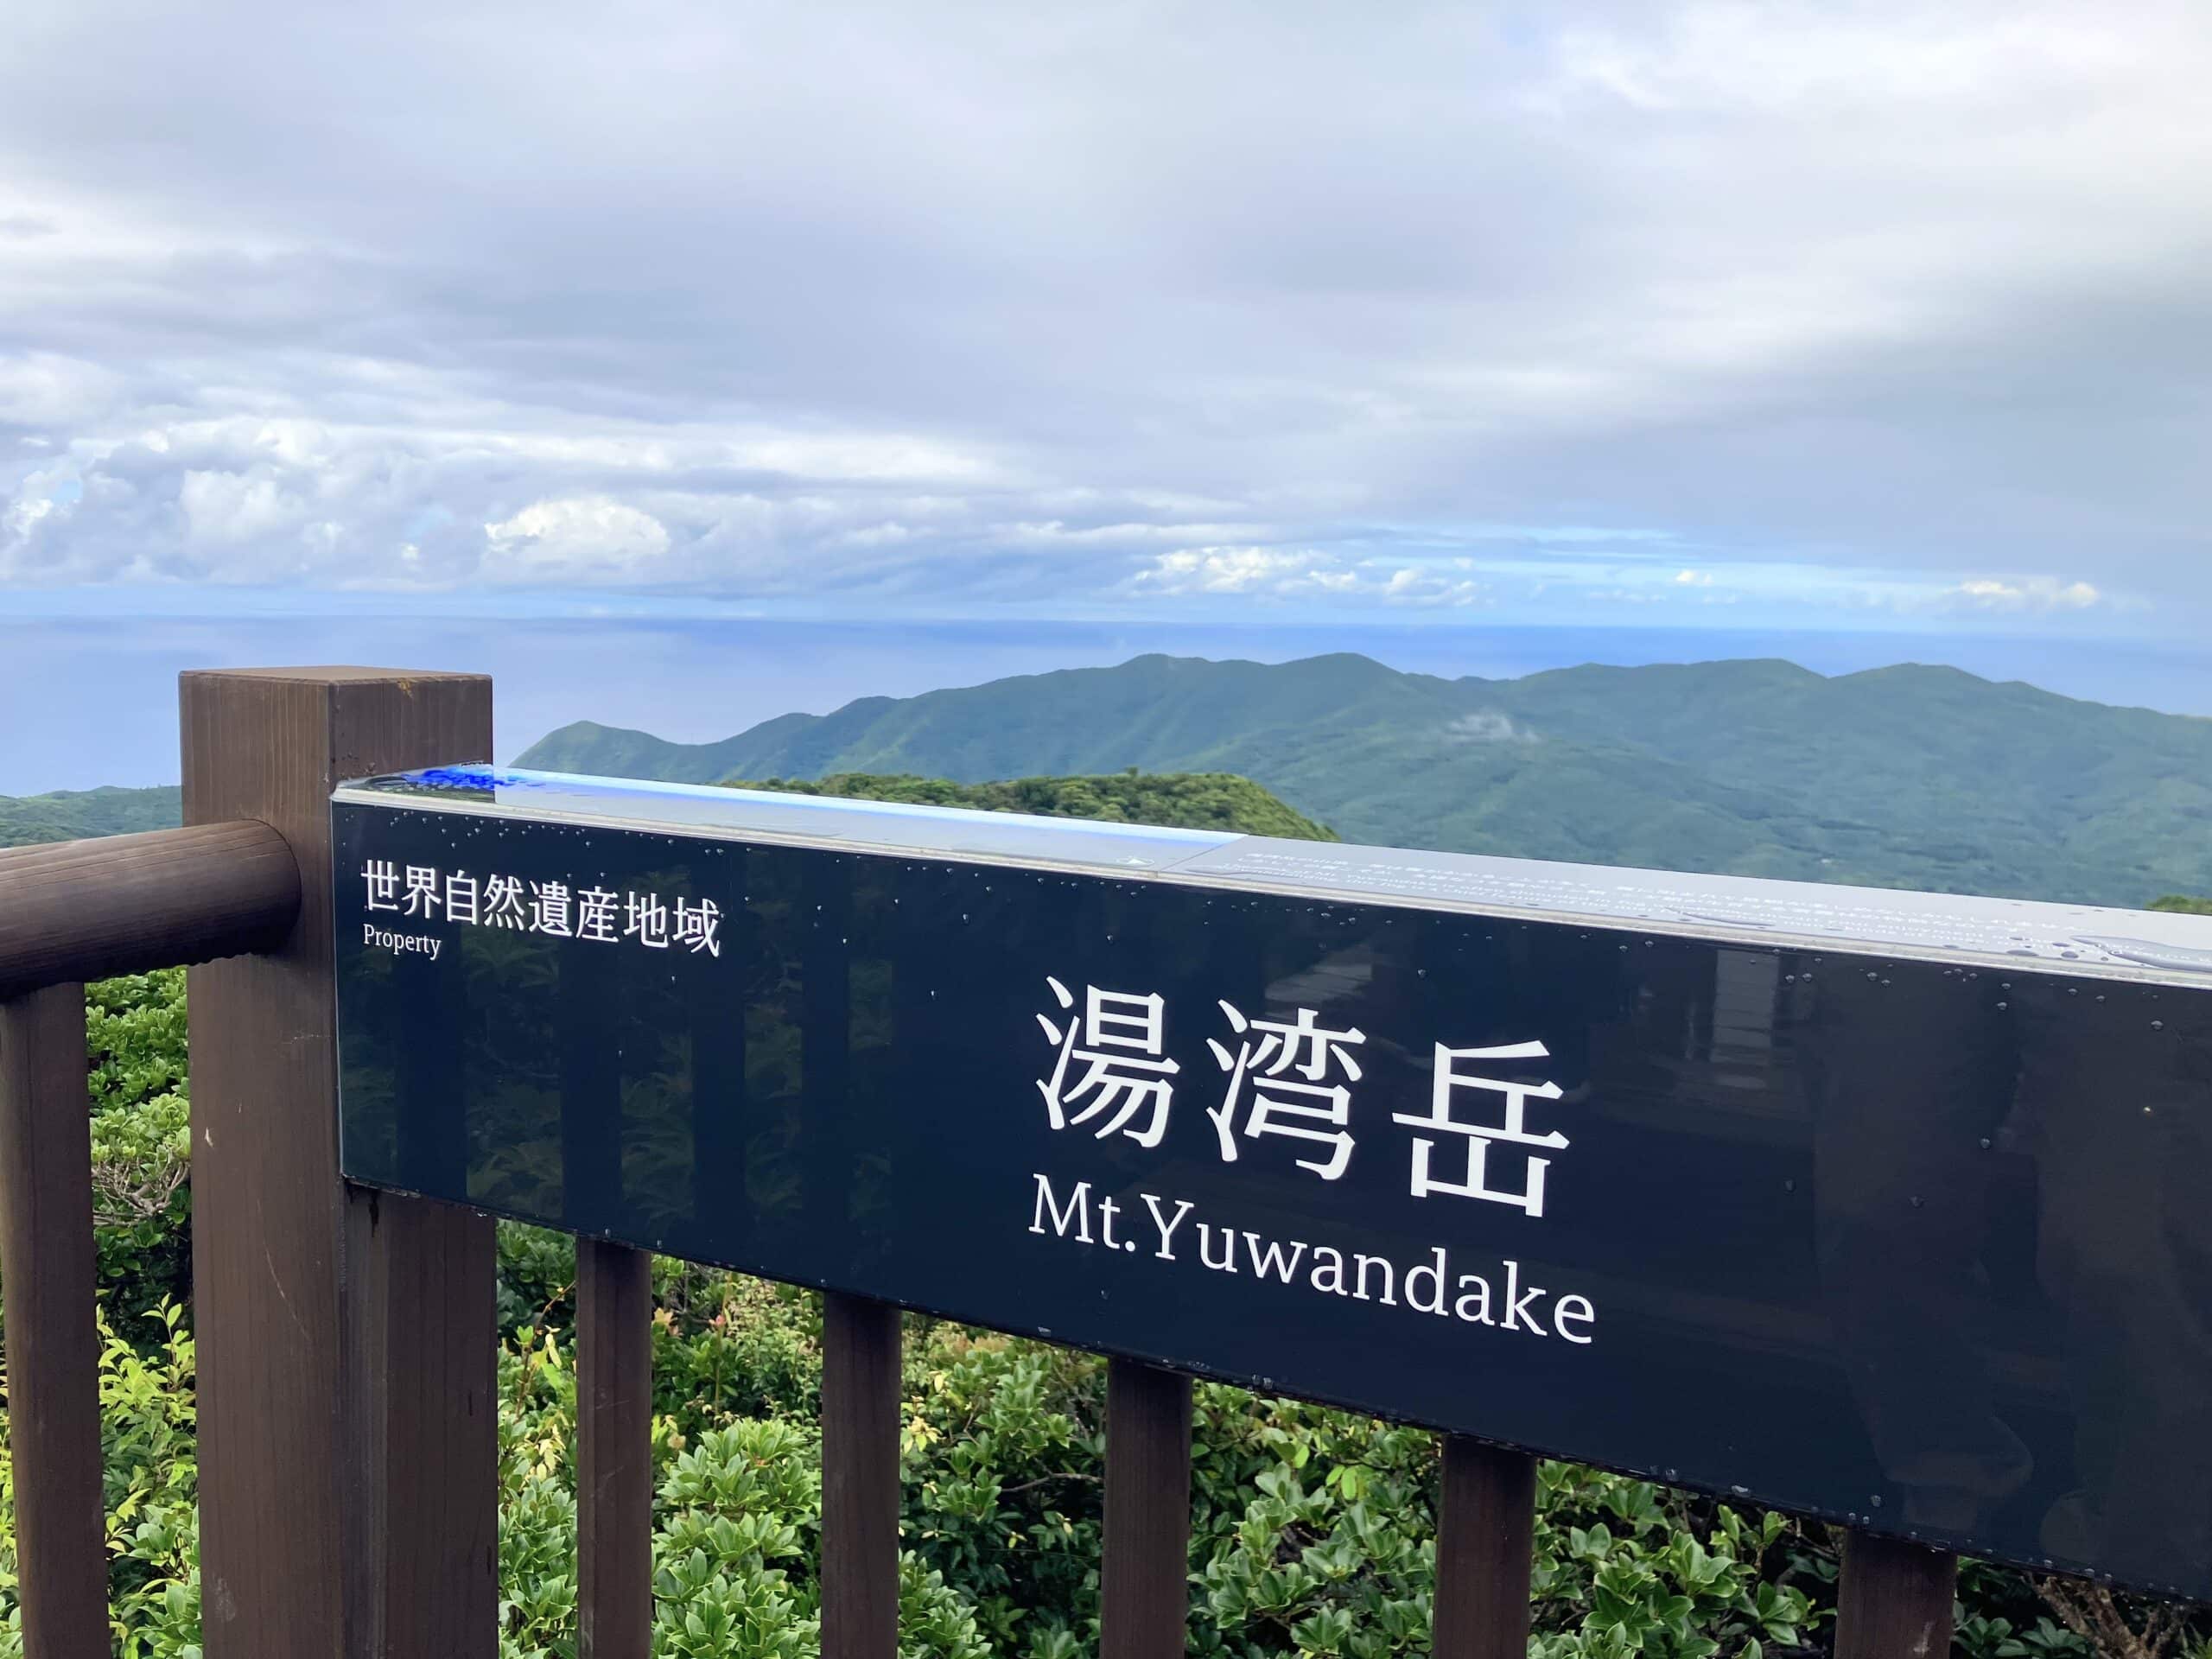 Observatory on the Mt.Yuwandake in Amami Oshima.